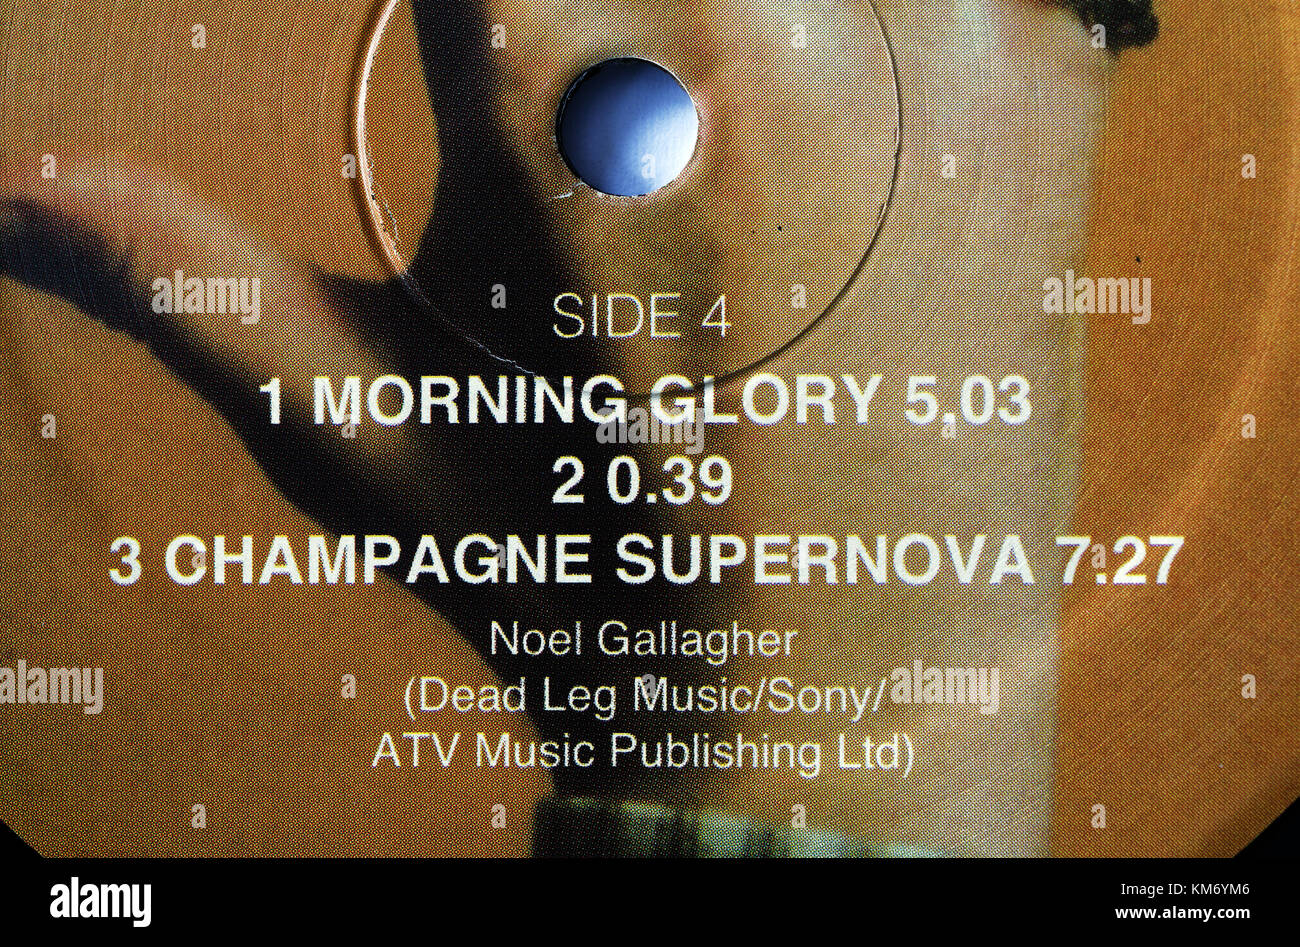 Album d'Oasis What's the Story Morning Glory label détail Banque D'Images